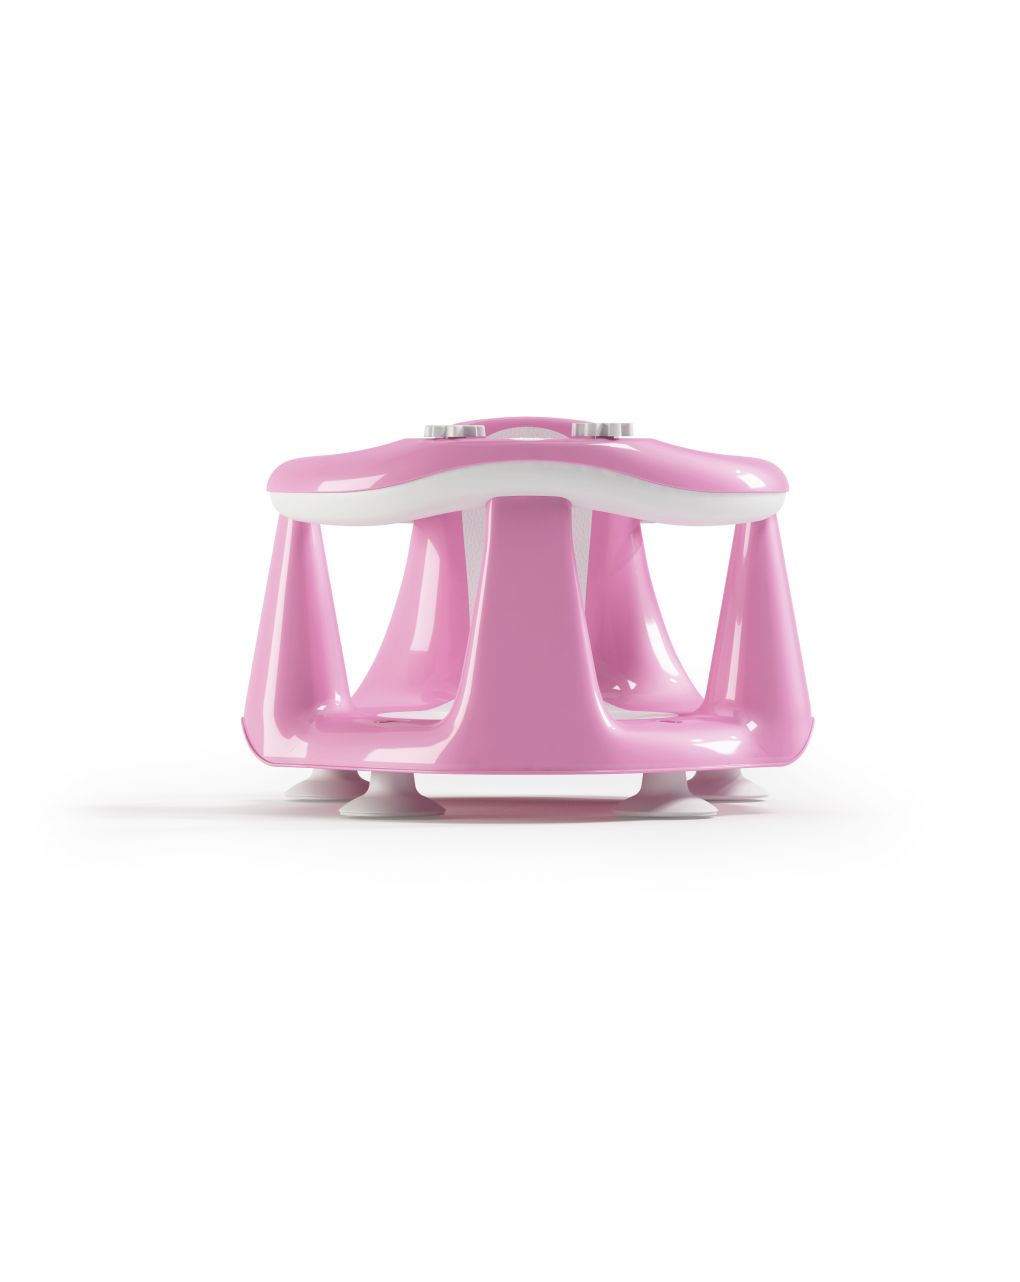 Flipper evolution rosa - seduta antiscivolo per bagnetto - ok baby - Okbaby